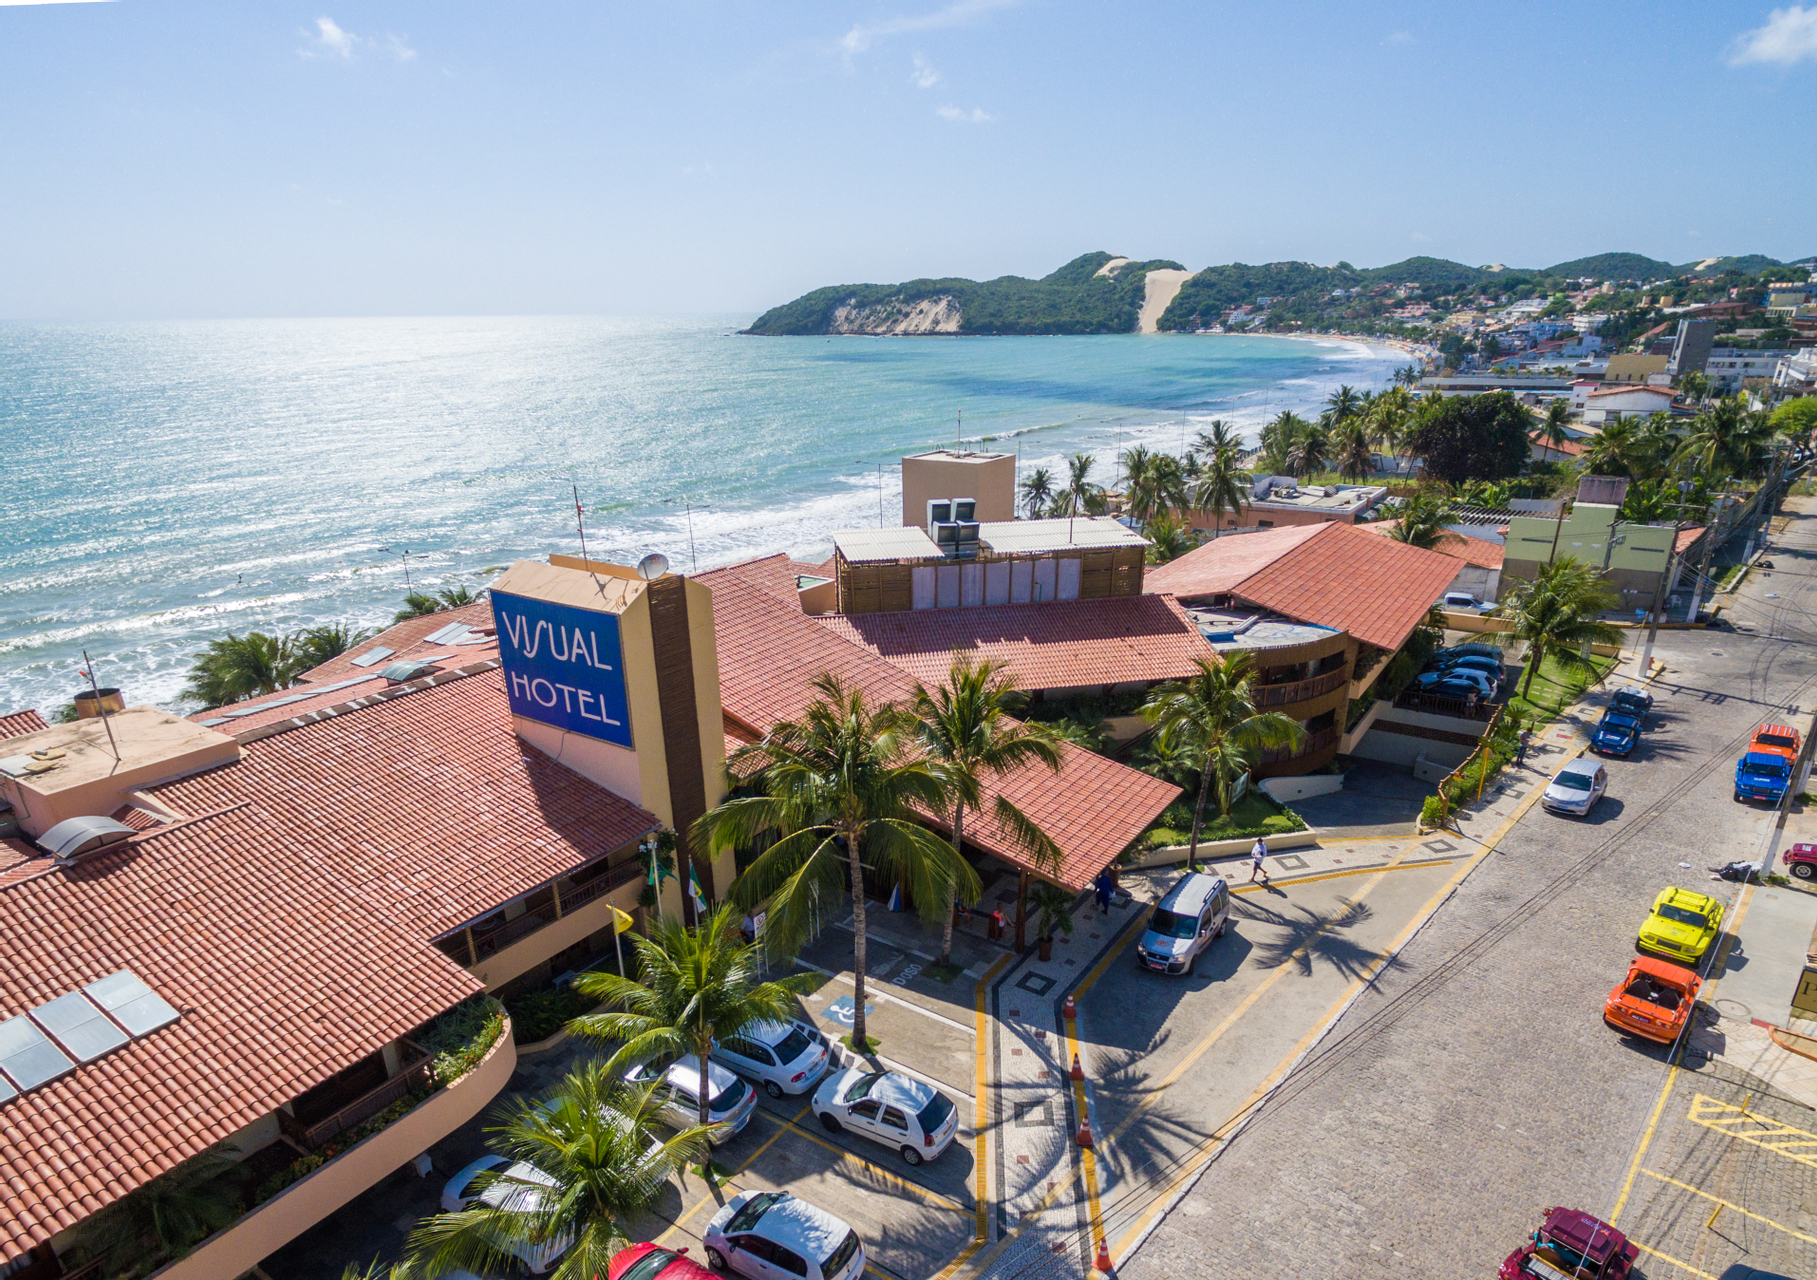 Visual Praia Hotel, Natal